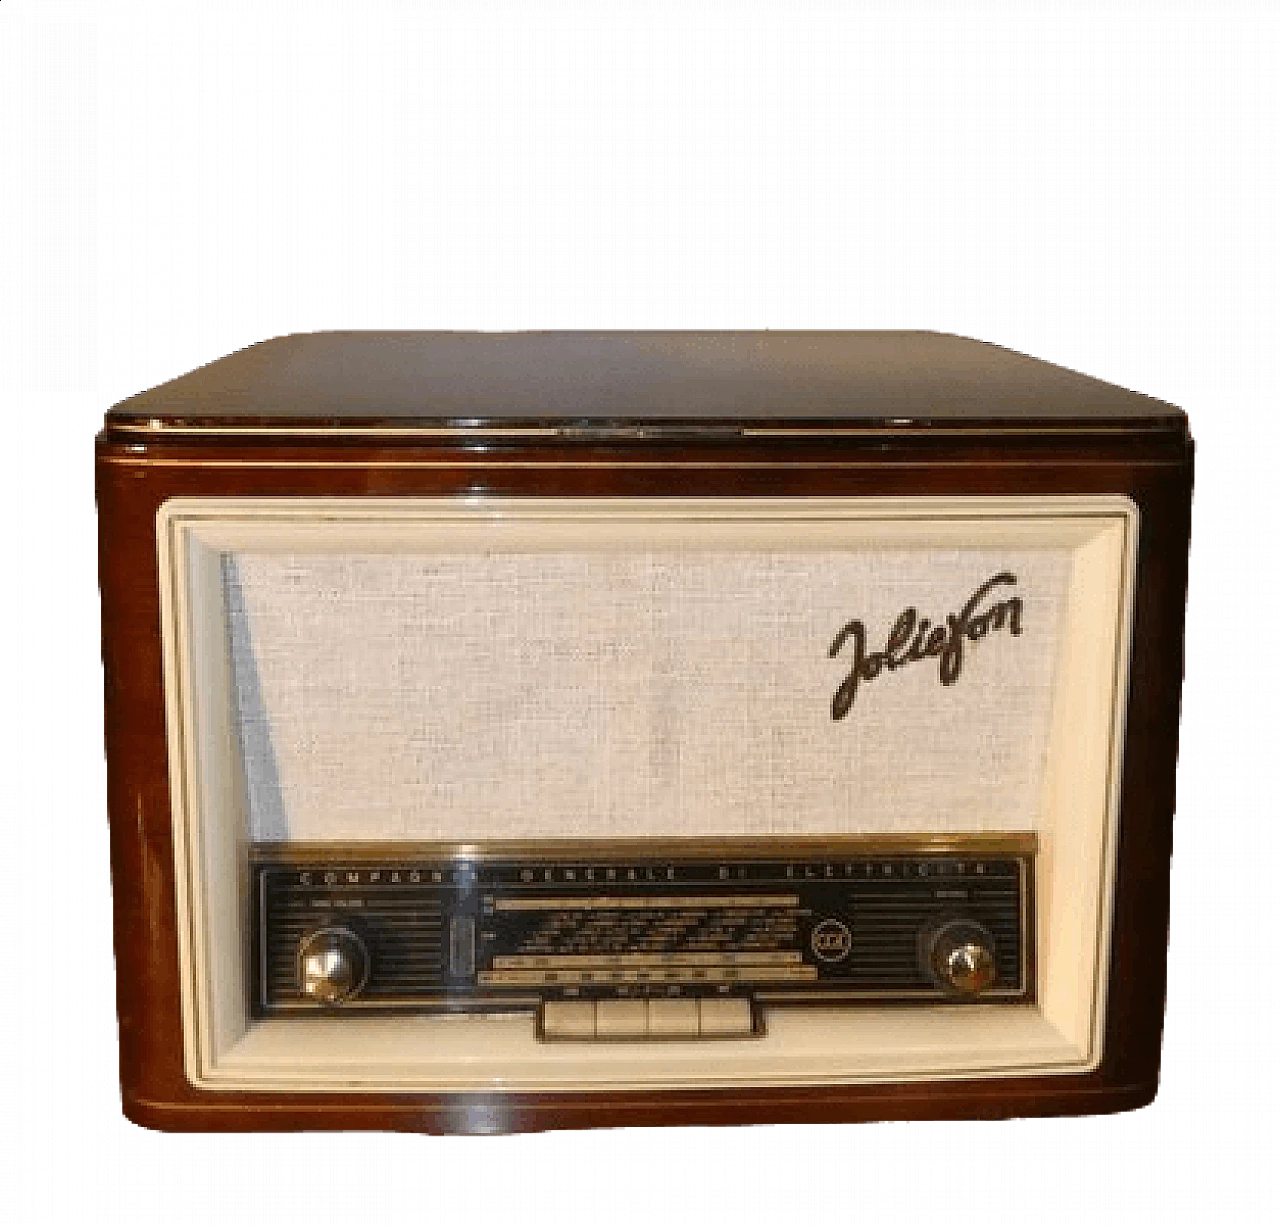 Wood Joliefon RFS 6597 turntable radio by CGE, 1950s 17